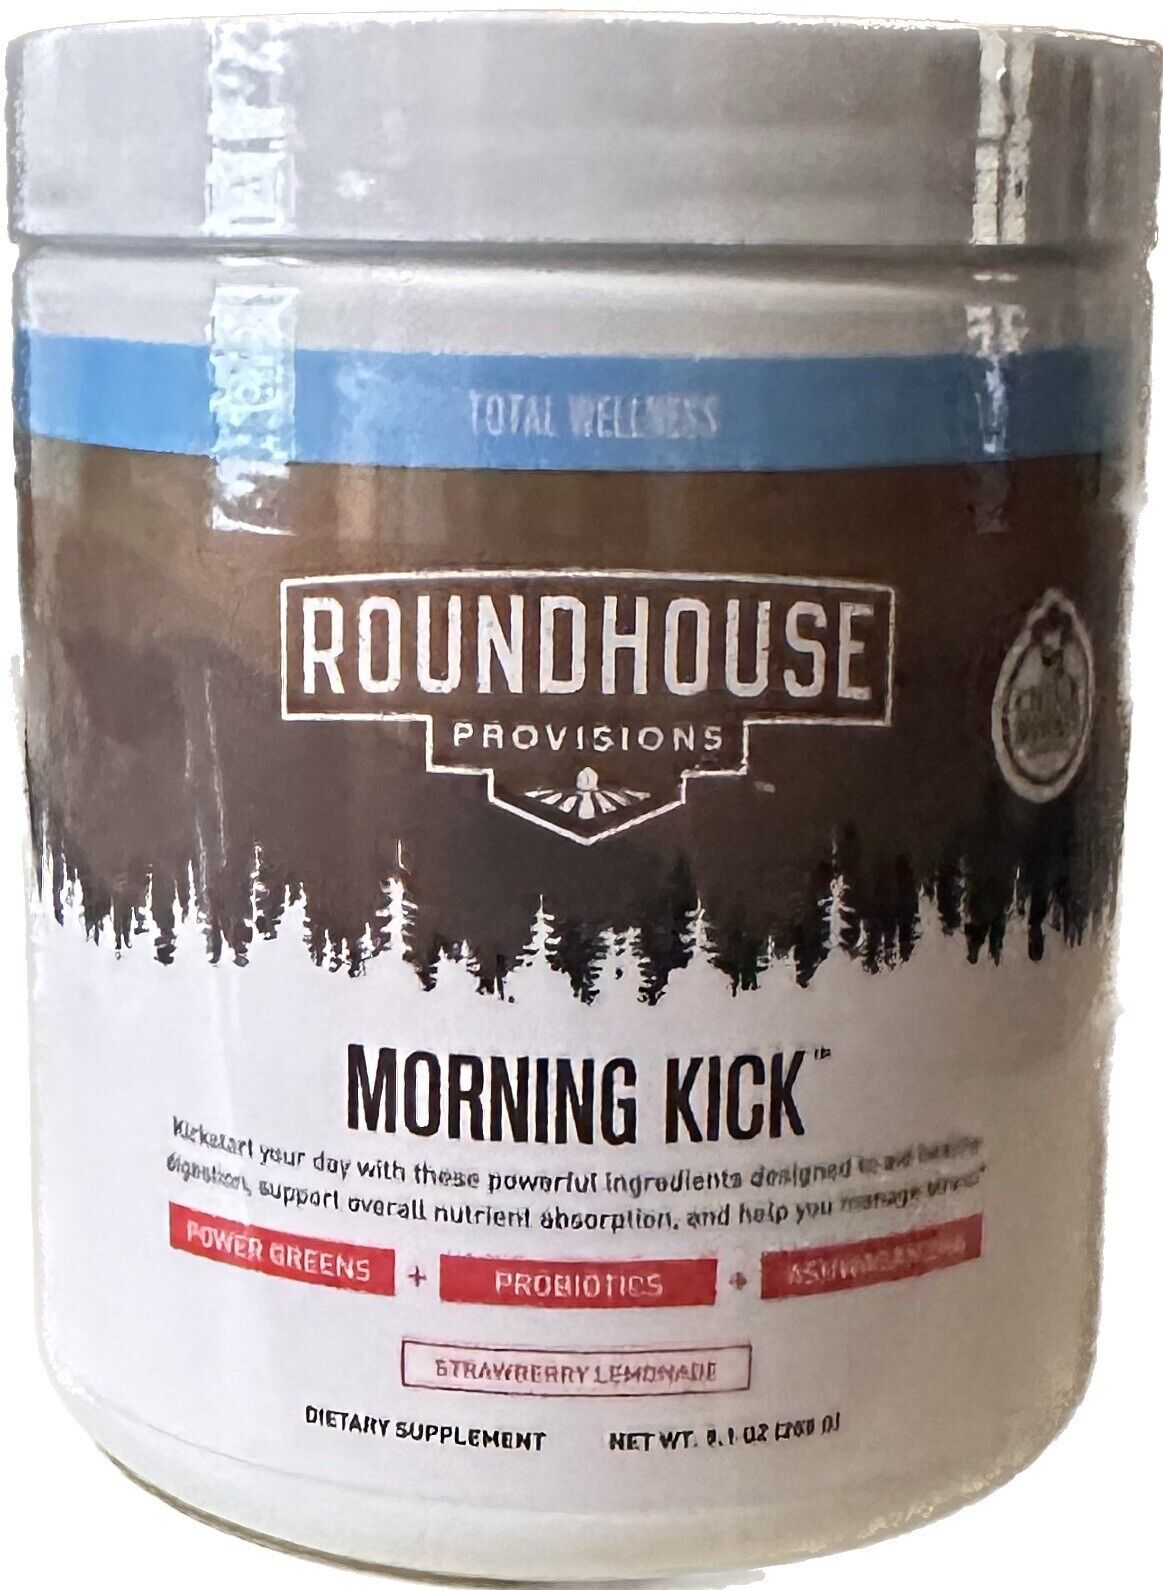 Roundhouse Morning Kick. New & Sealed. Digestion Support, Probiotics, Ashwagandh